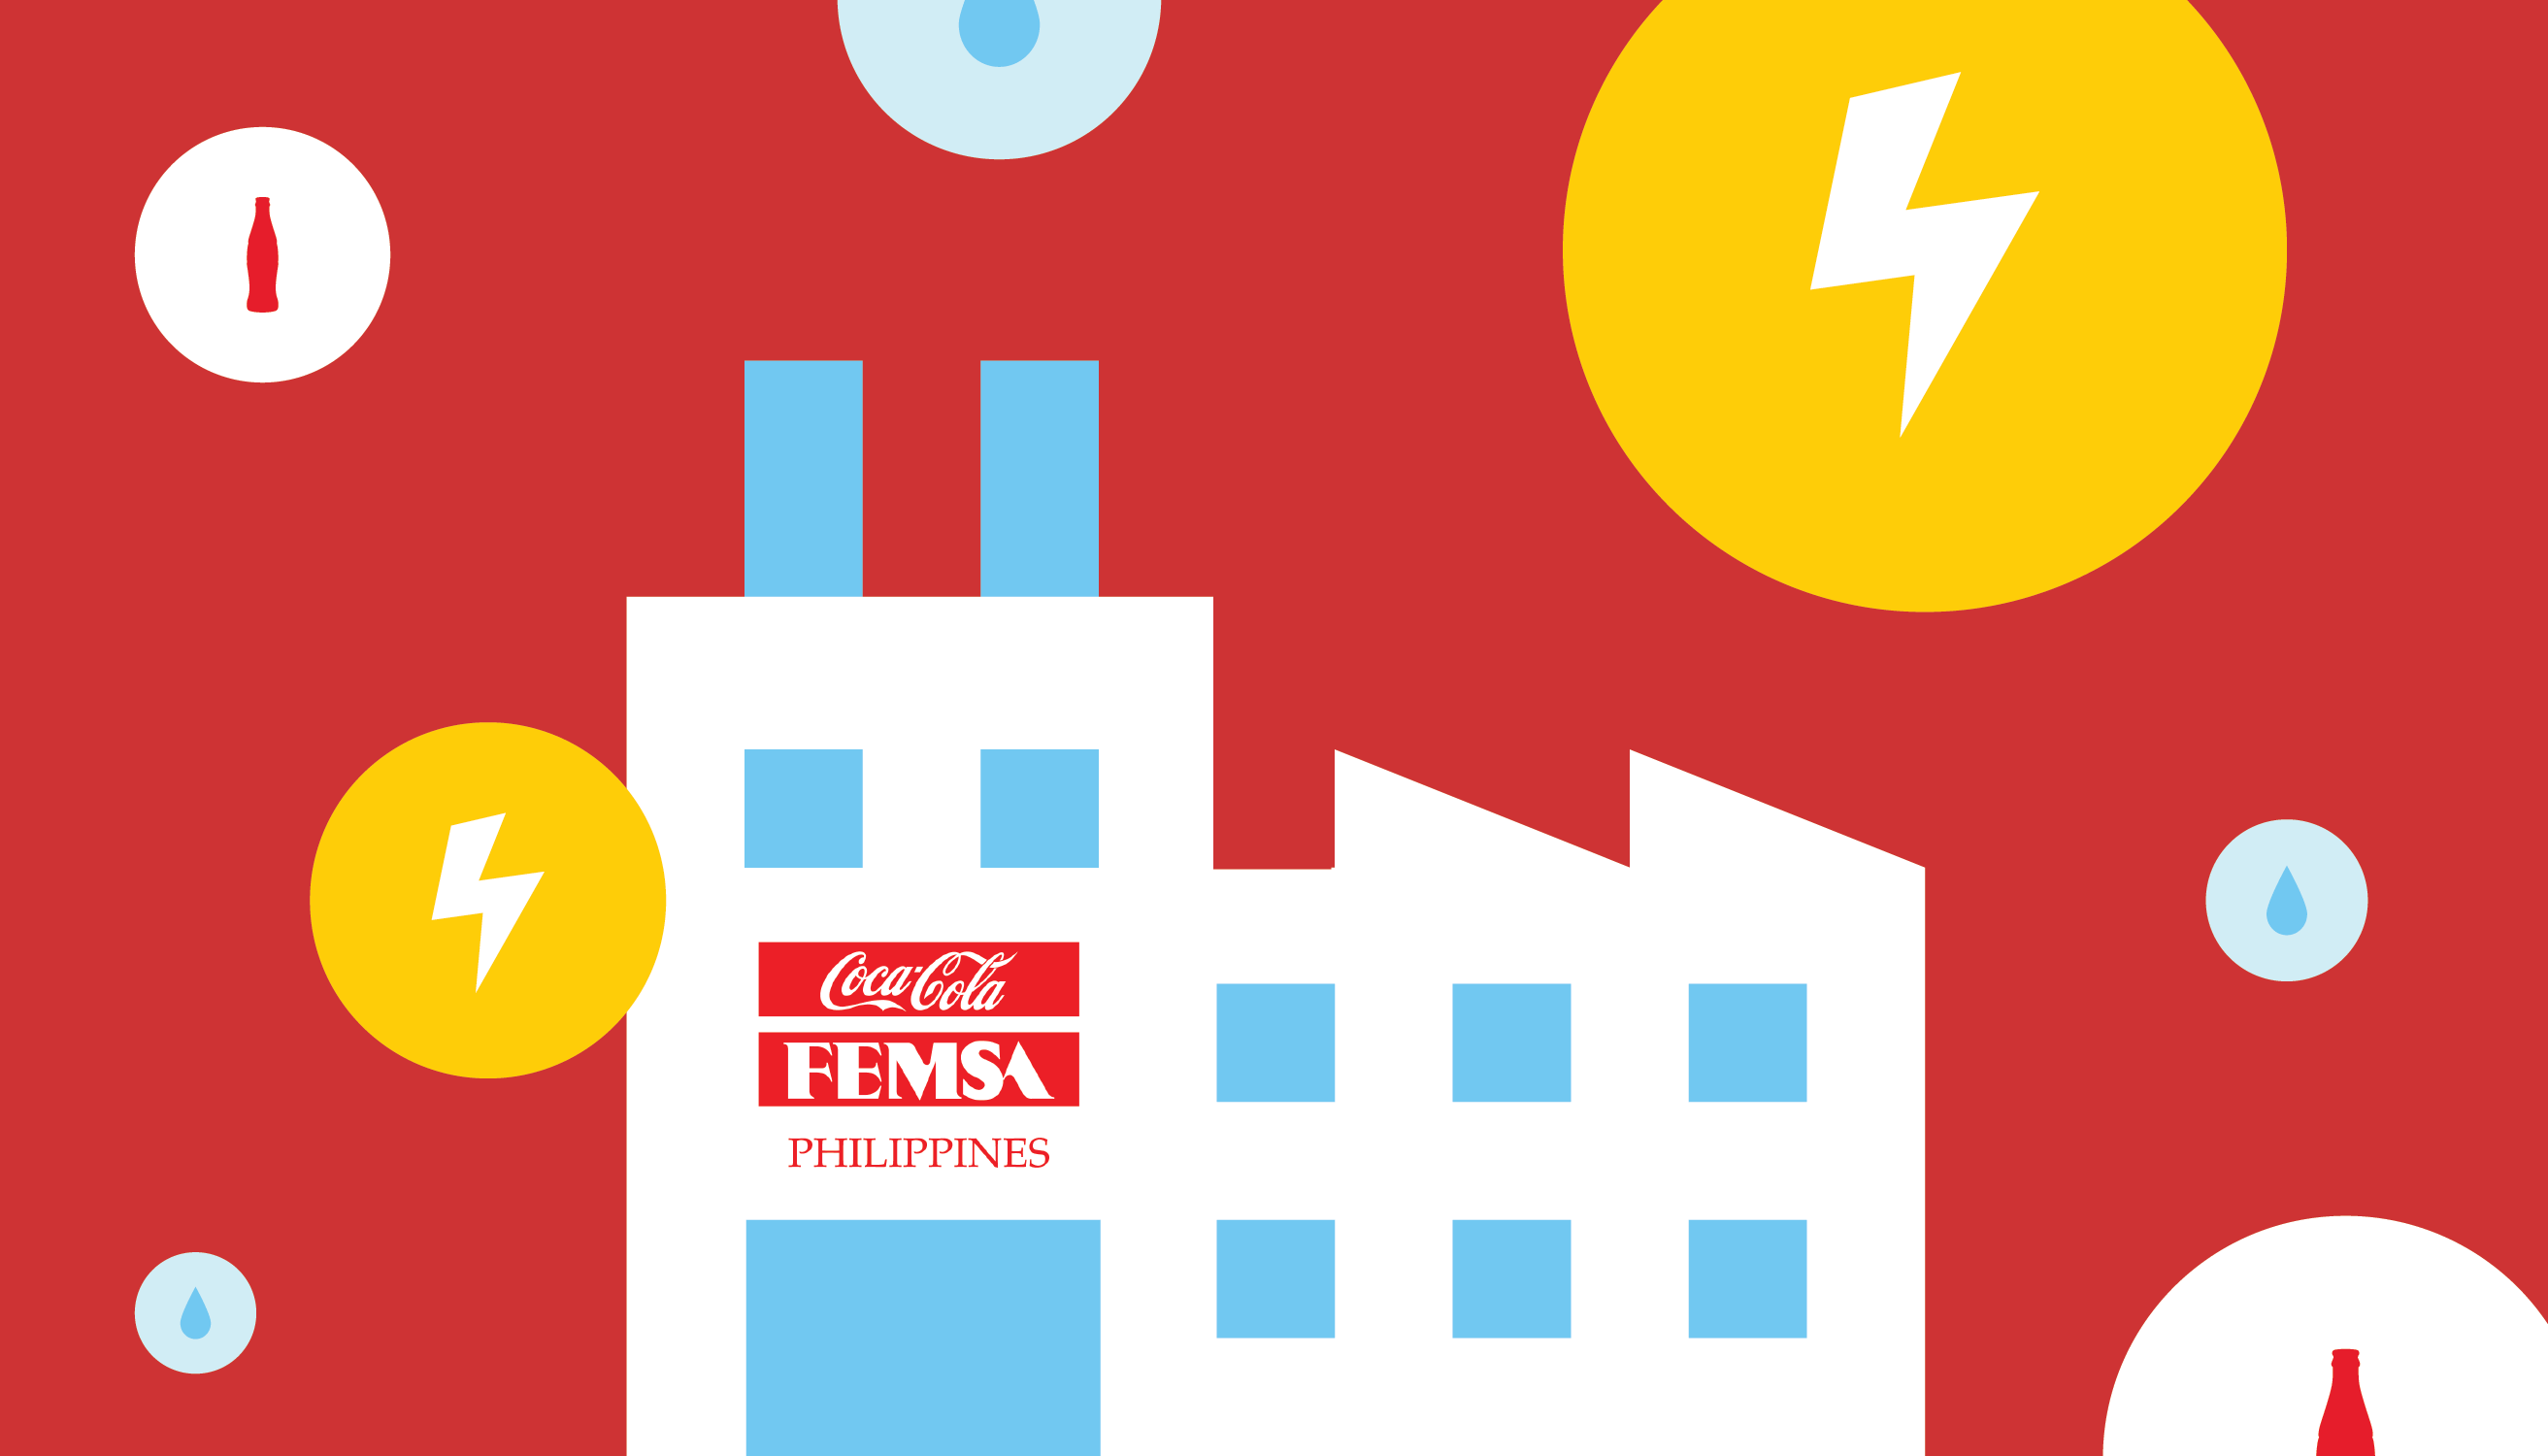 Coca-Cola FEMSA Philippines: A leader in sustainability